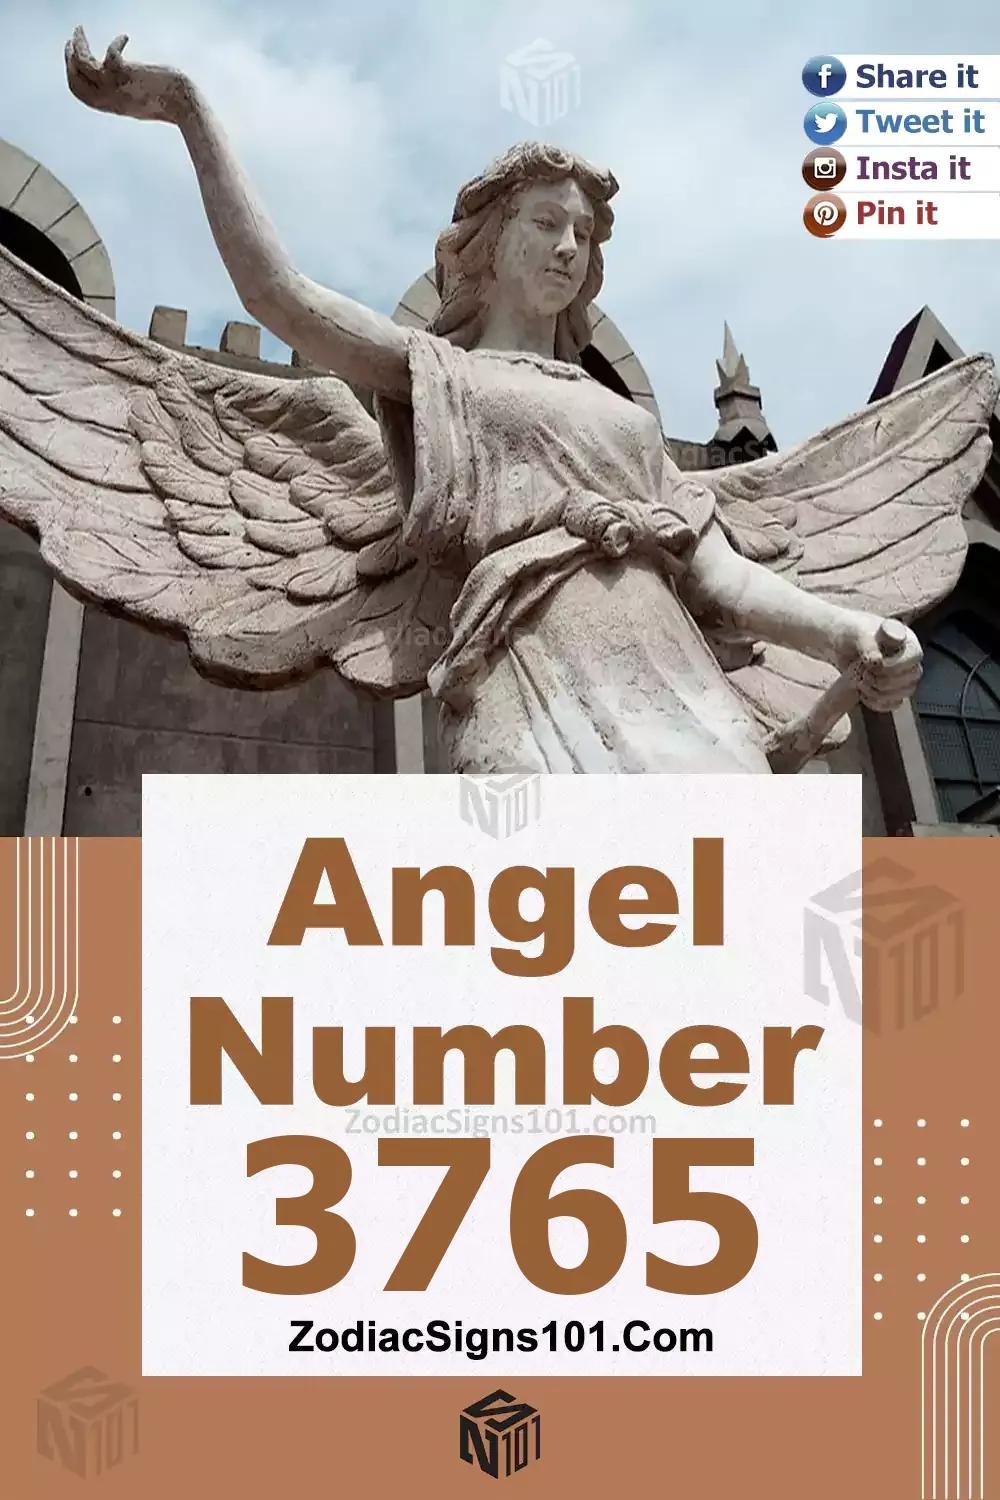 3765-Angel-Number-Meaning.jpg